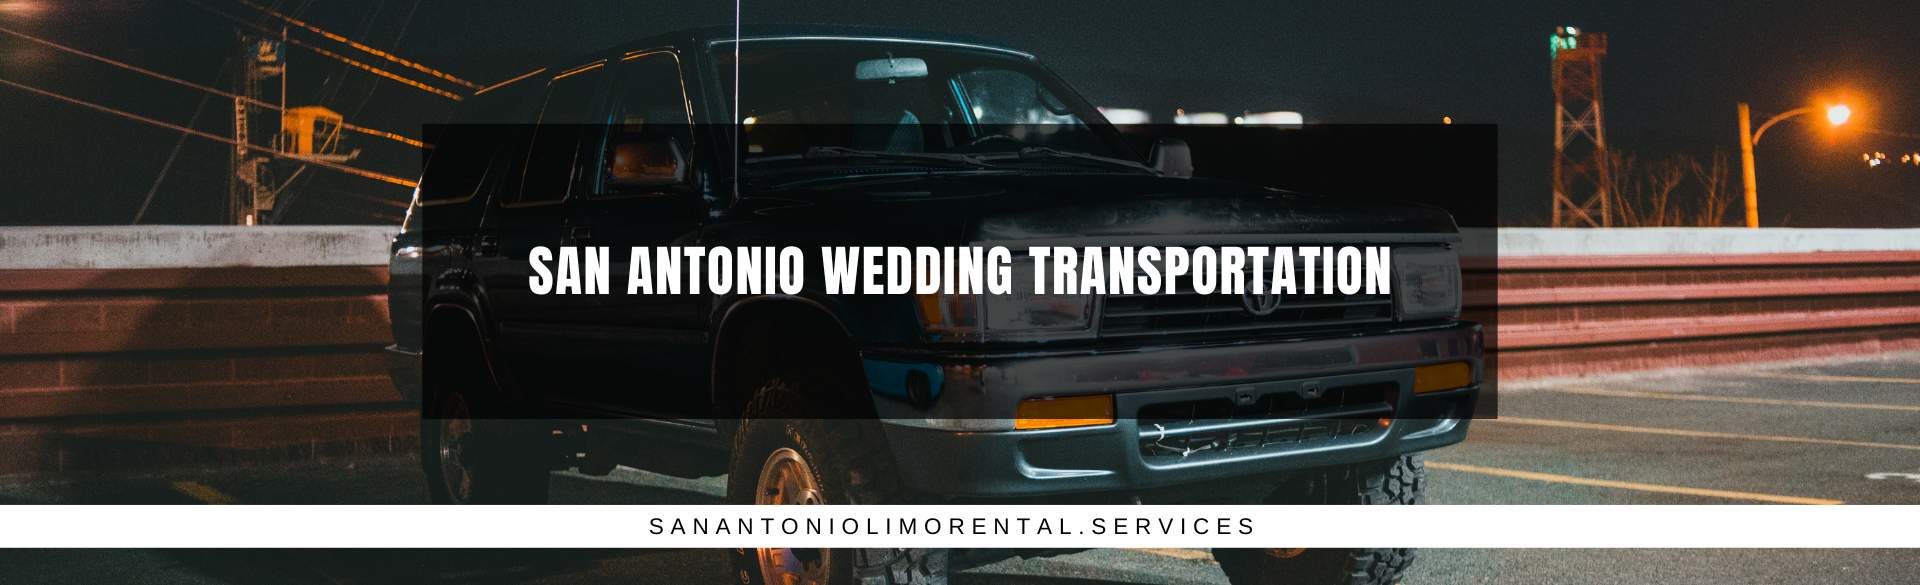 San Antonio Wedding Transportation